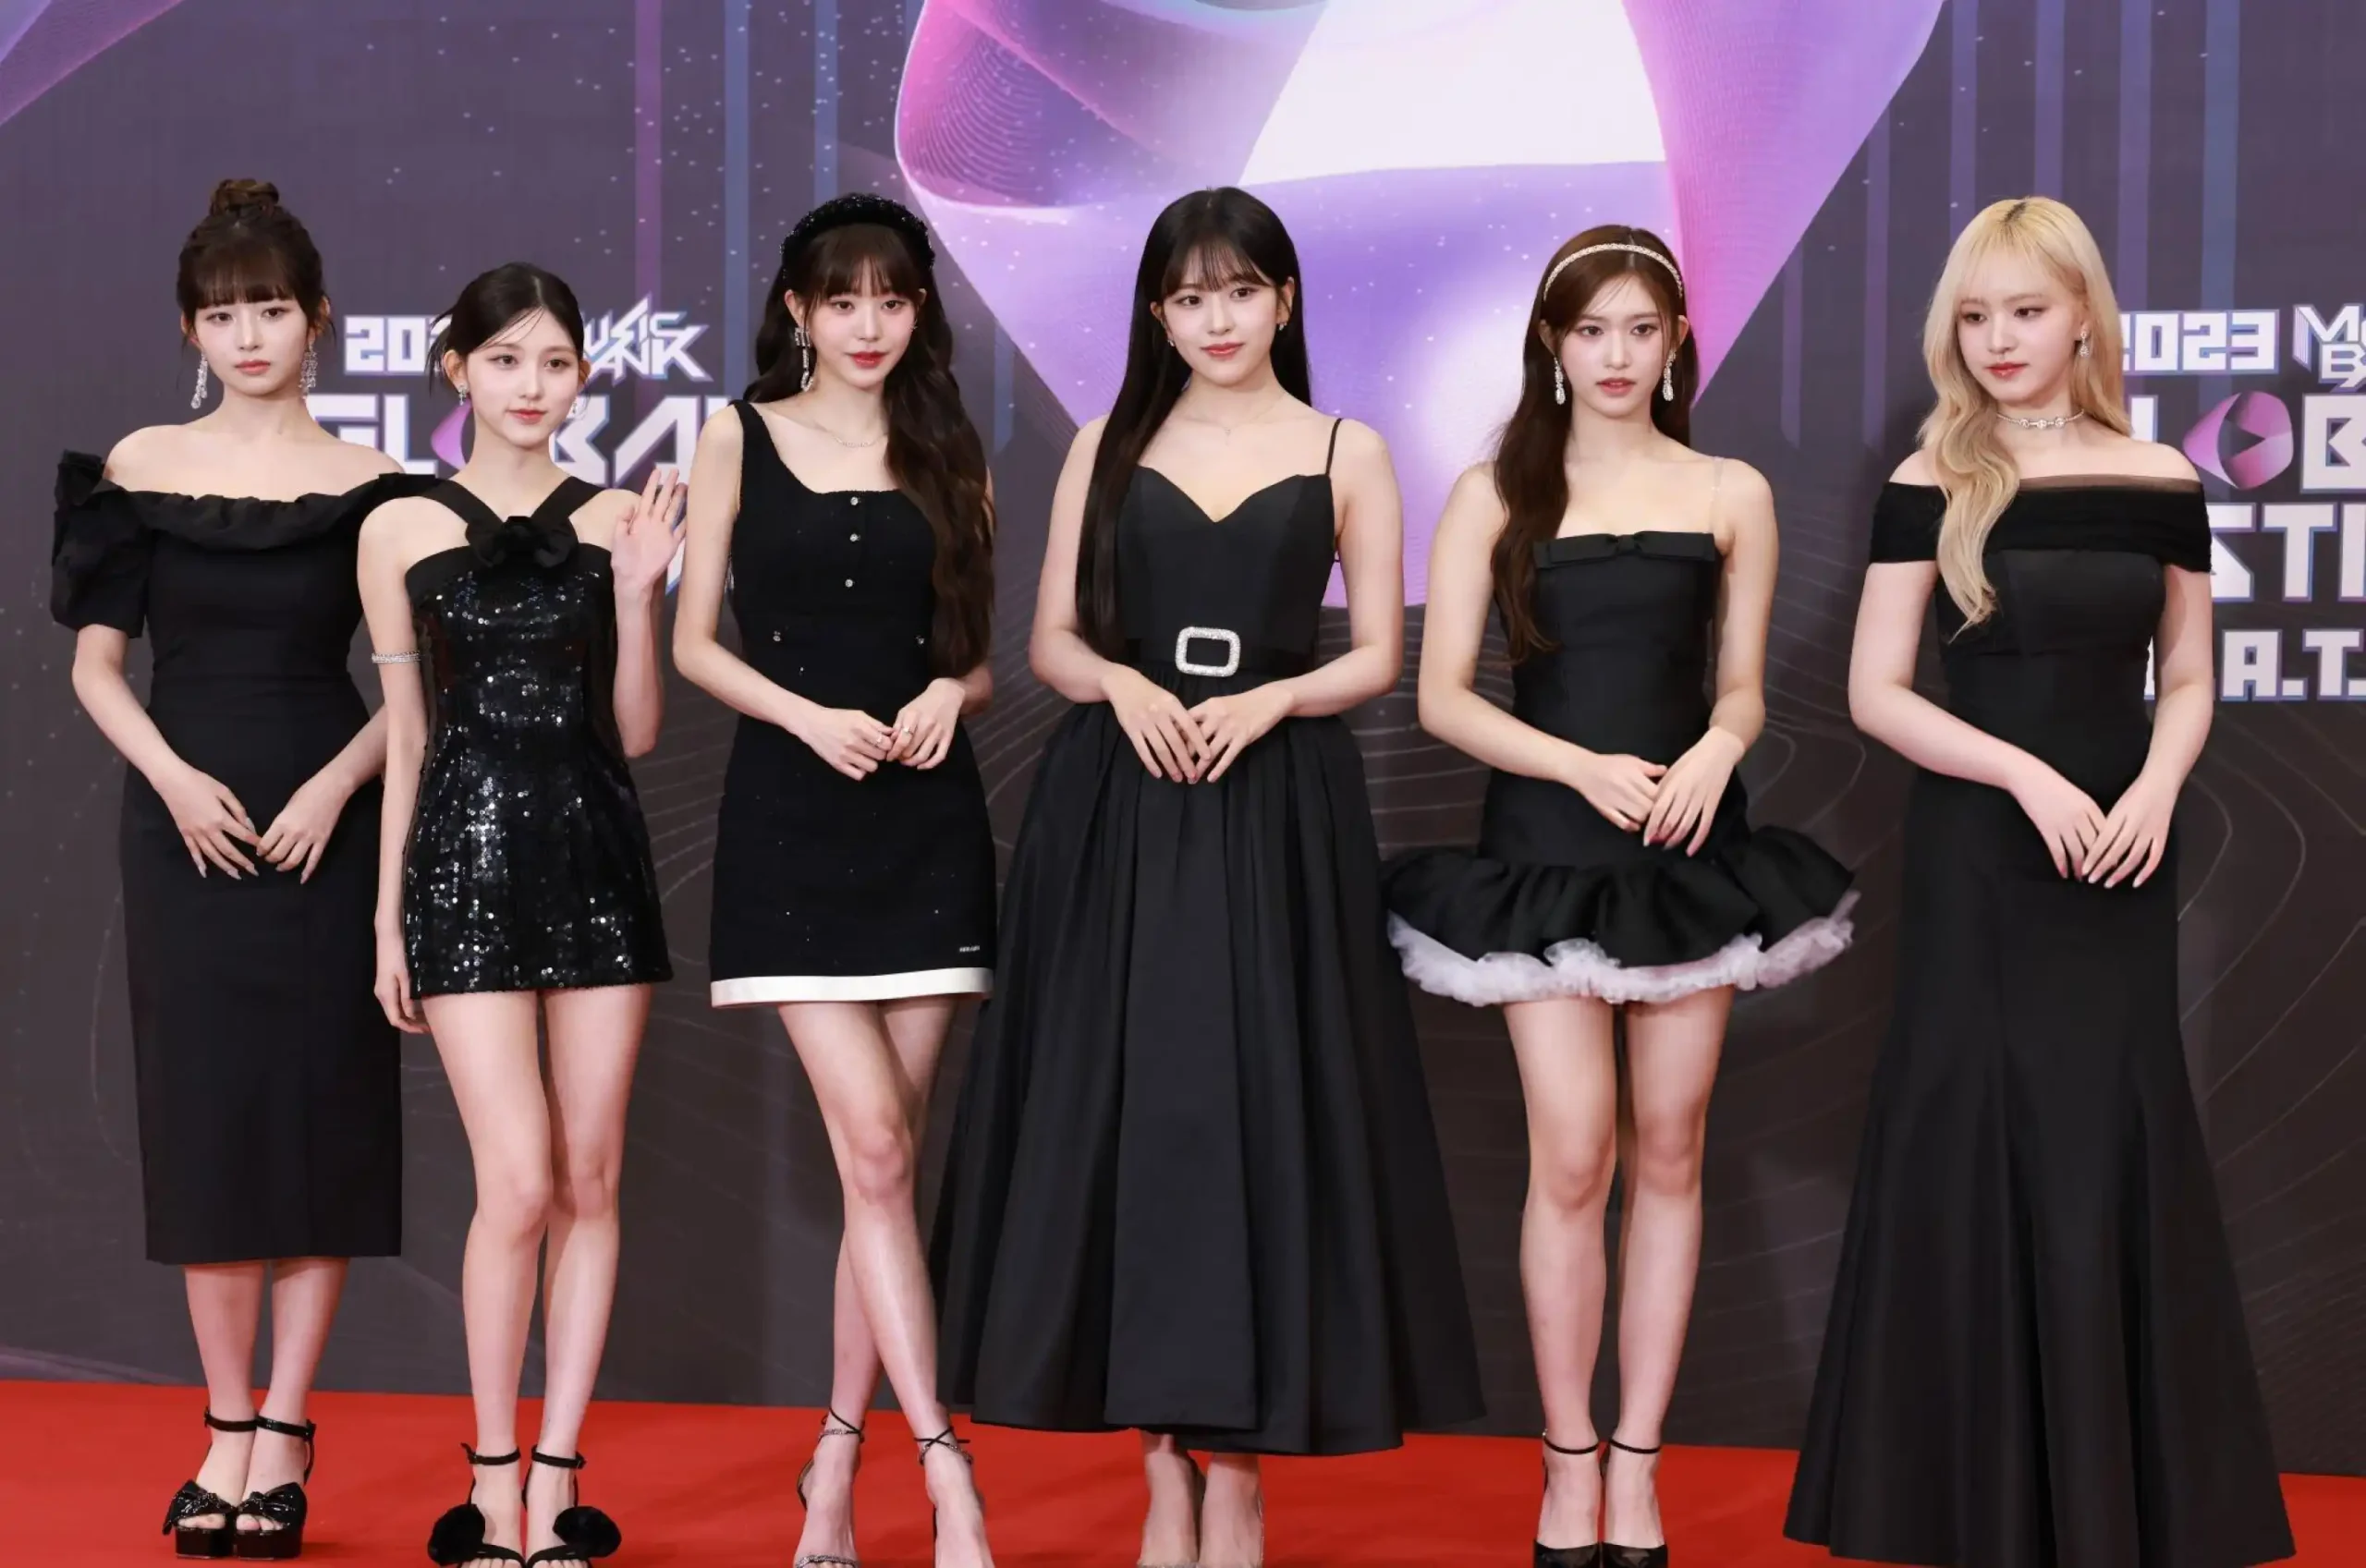 IVE Members: An Yujin, Gaeul, Rei, Wonyoung, Liz, and Leeseo